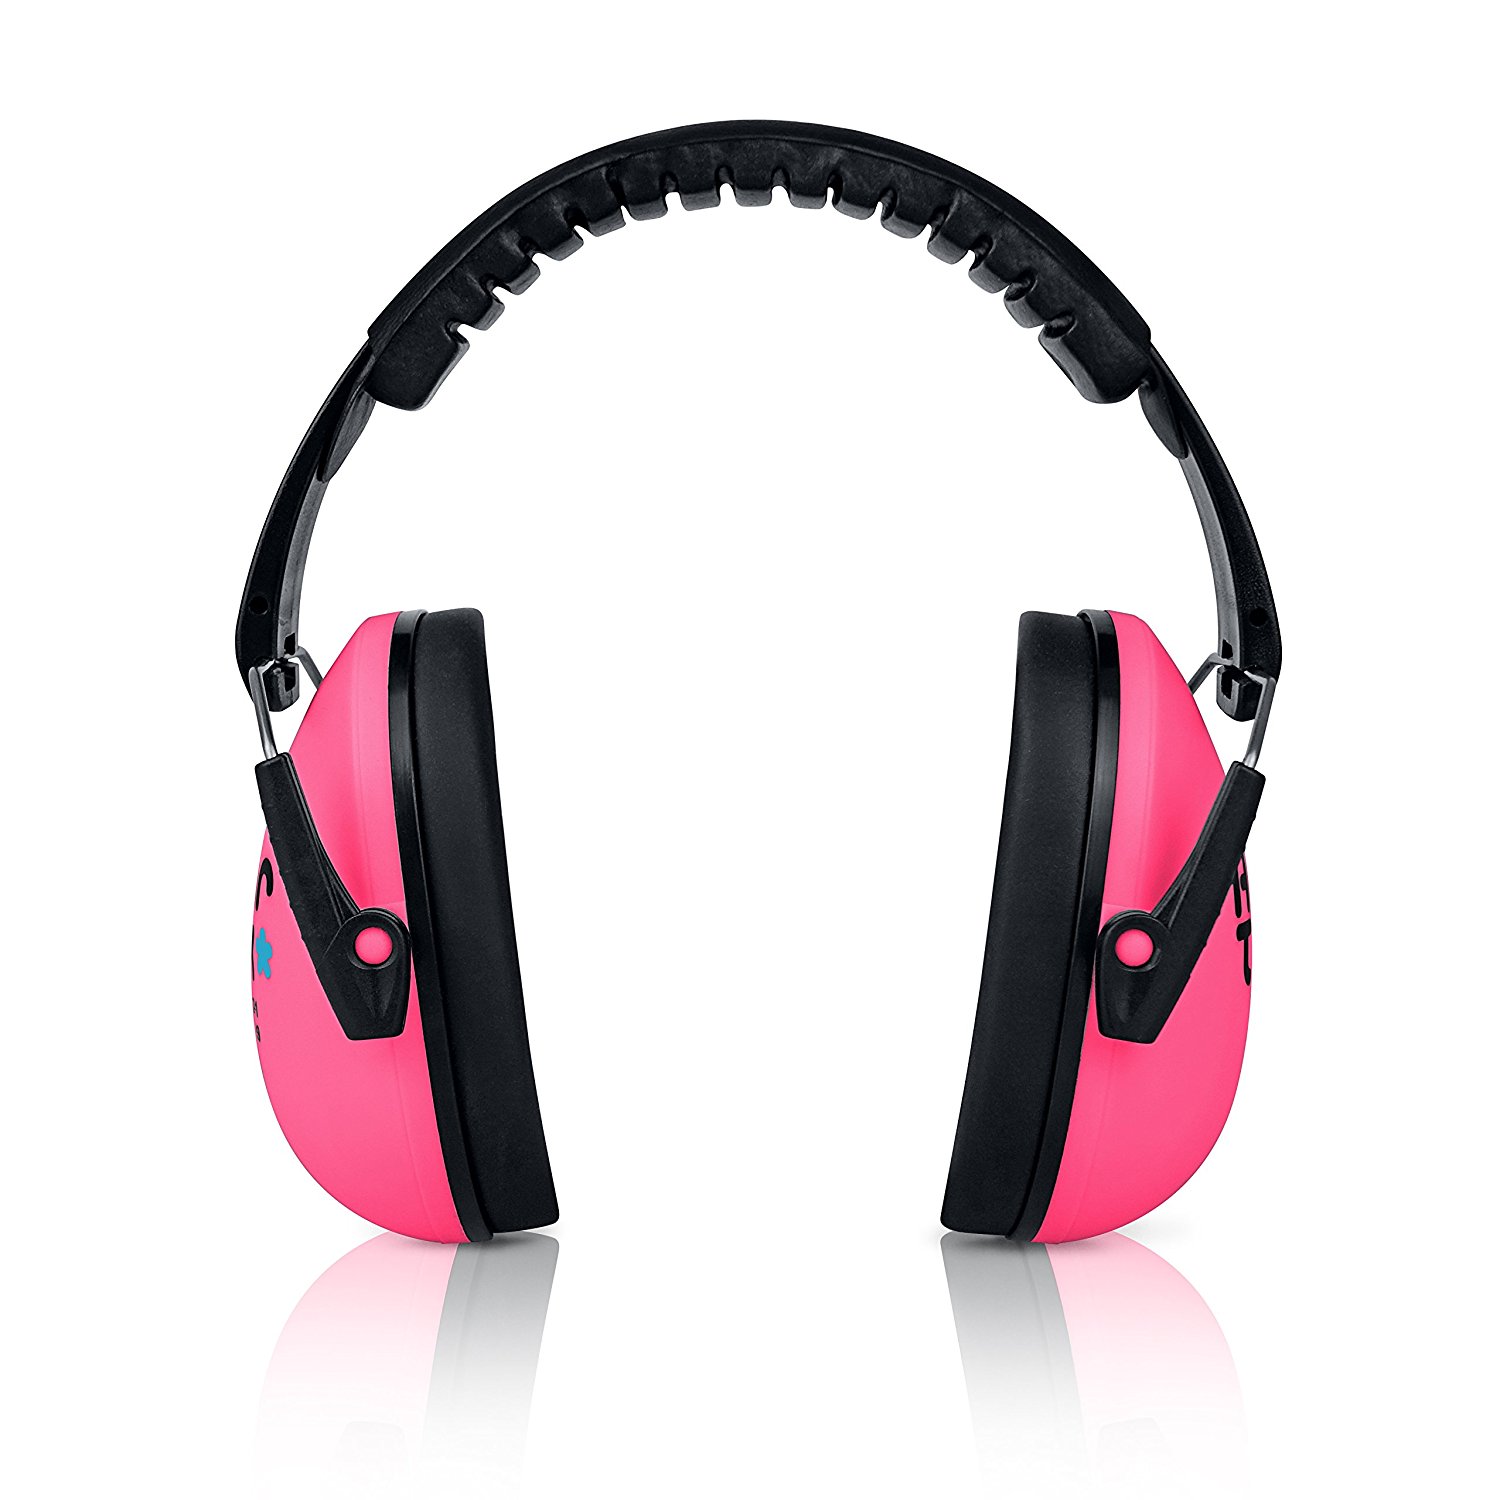 Amazon.com : HearTek Kids Earmuffs Hearing Protection with Travel ...